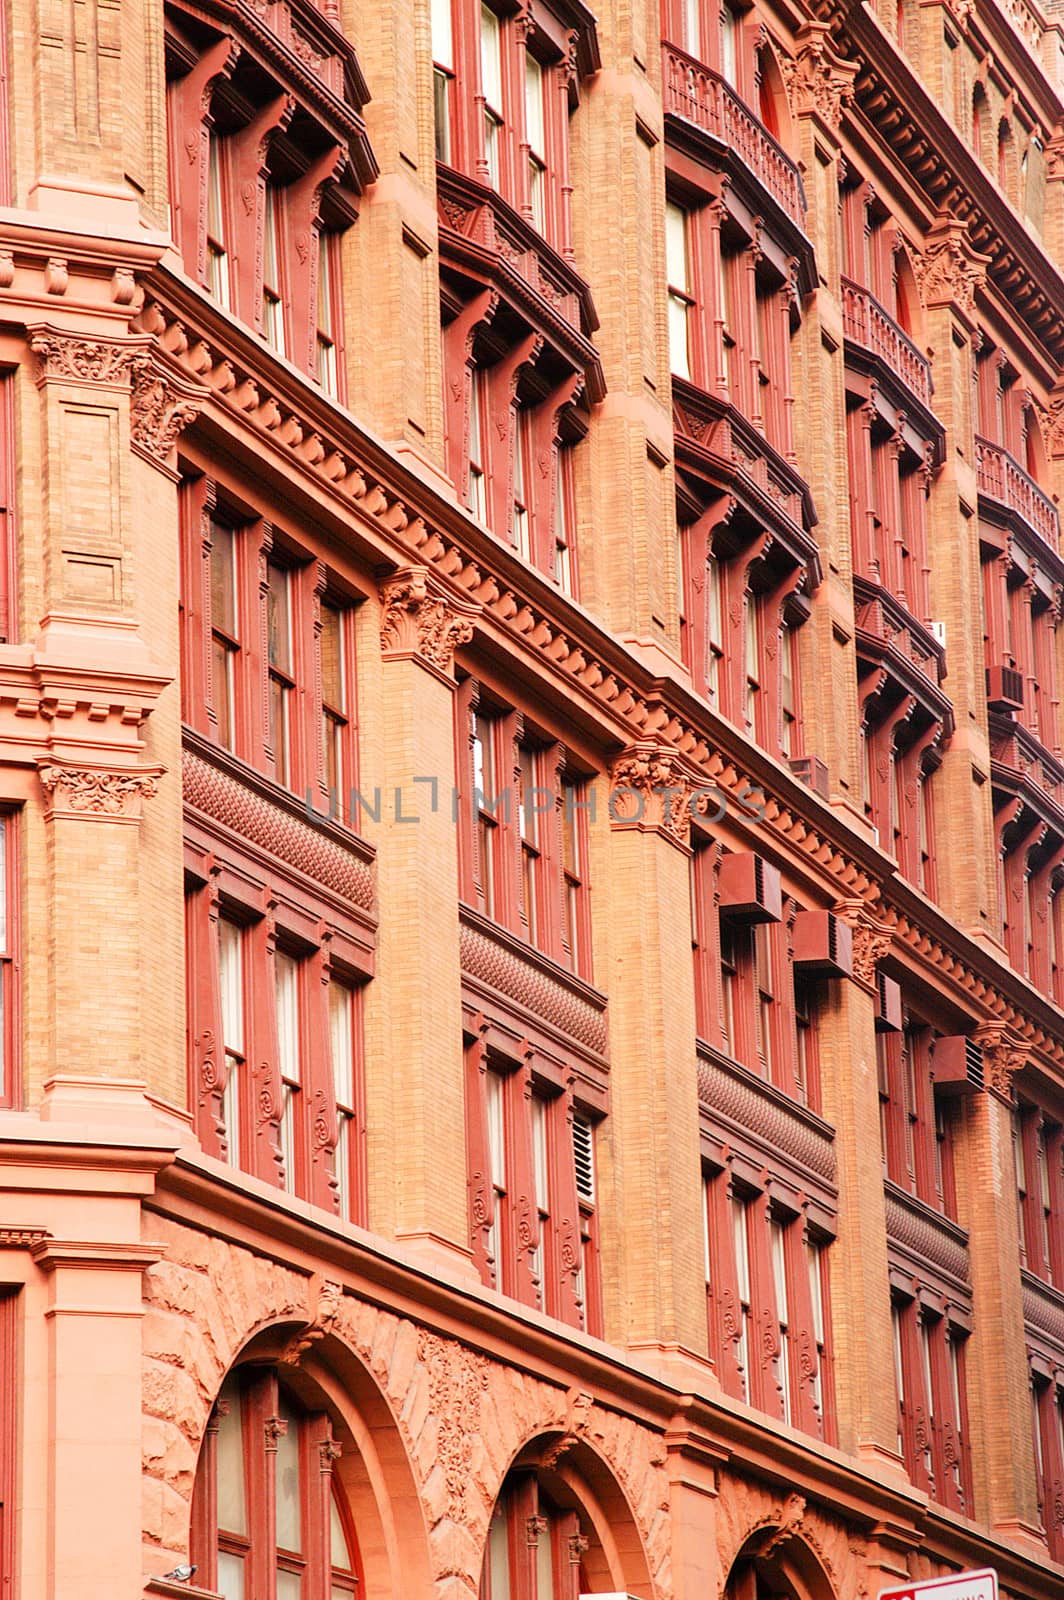 Manhattan Building front showing architecturral details